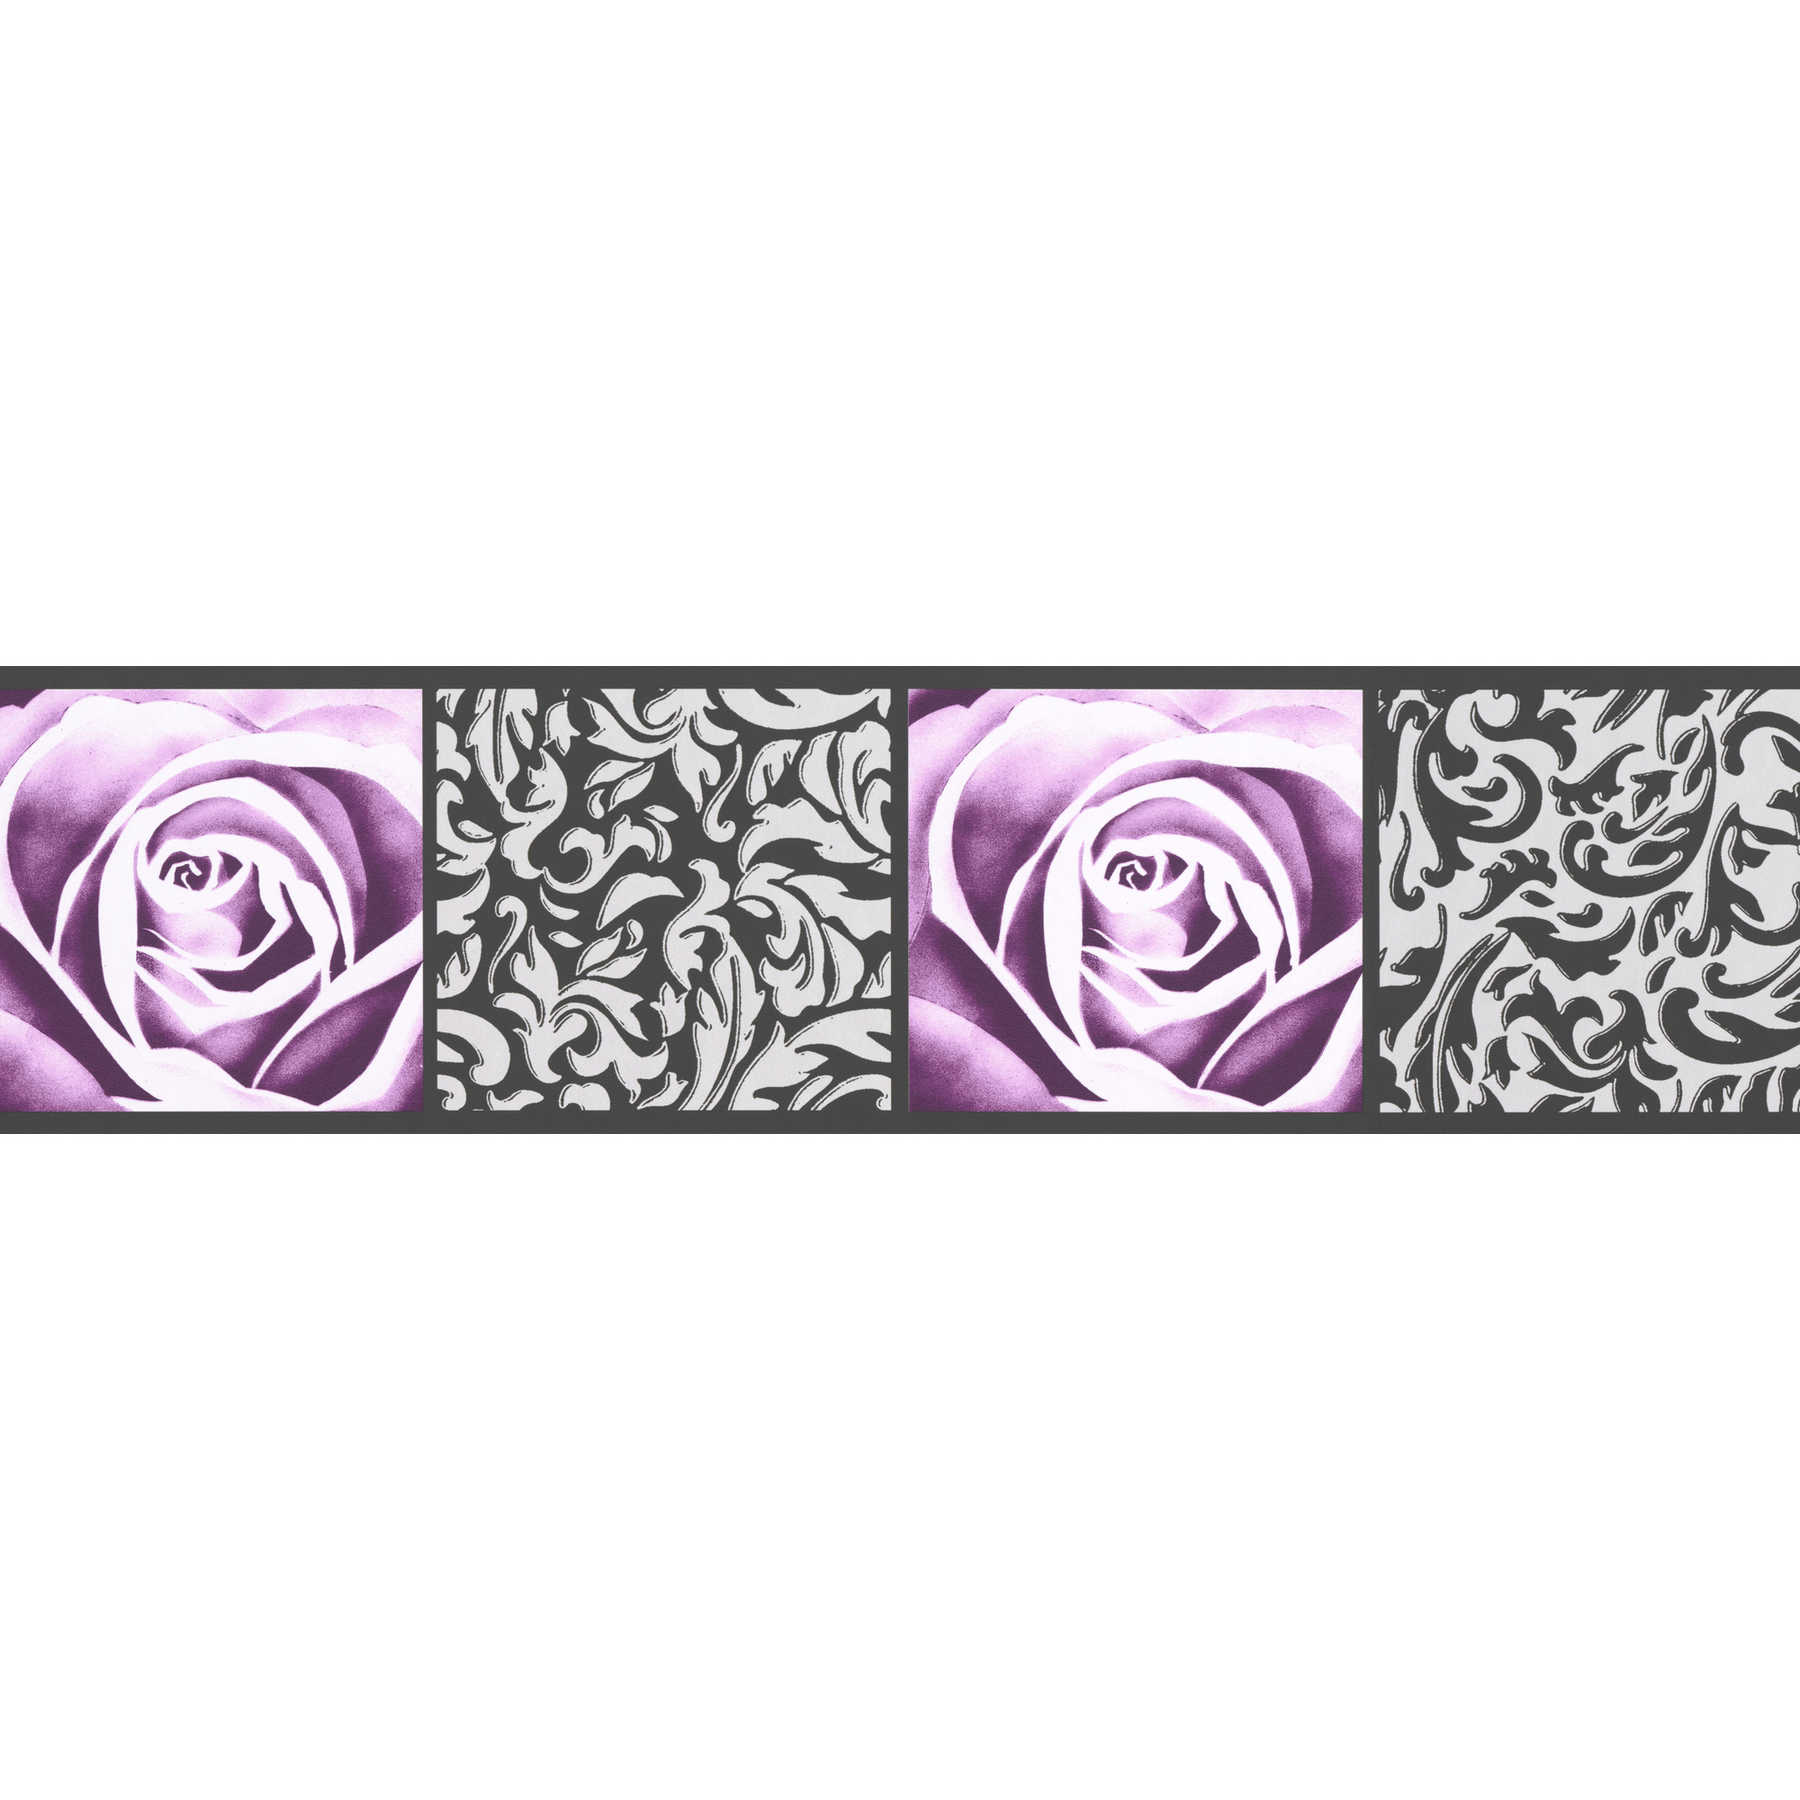         Wallpaper border with roses & ornament design - black, purple
    